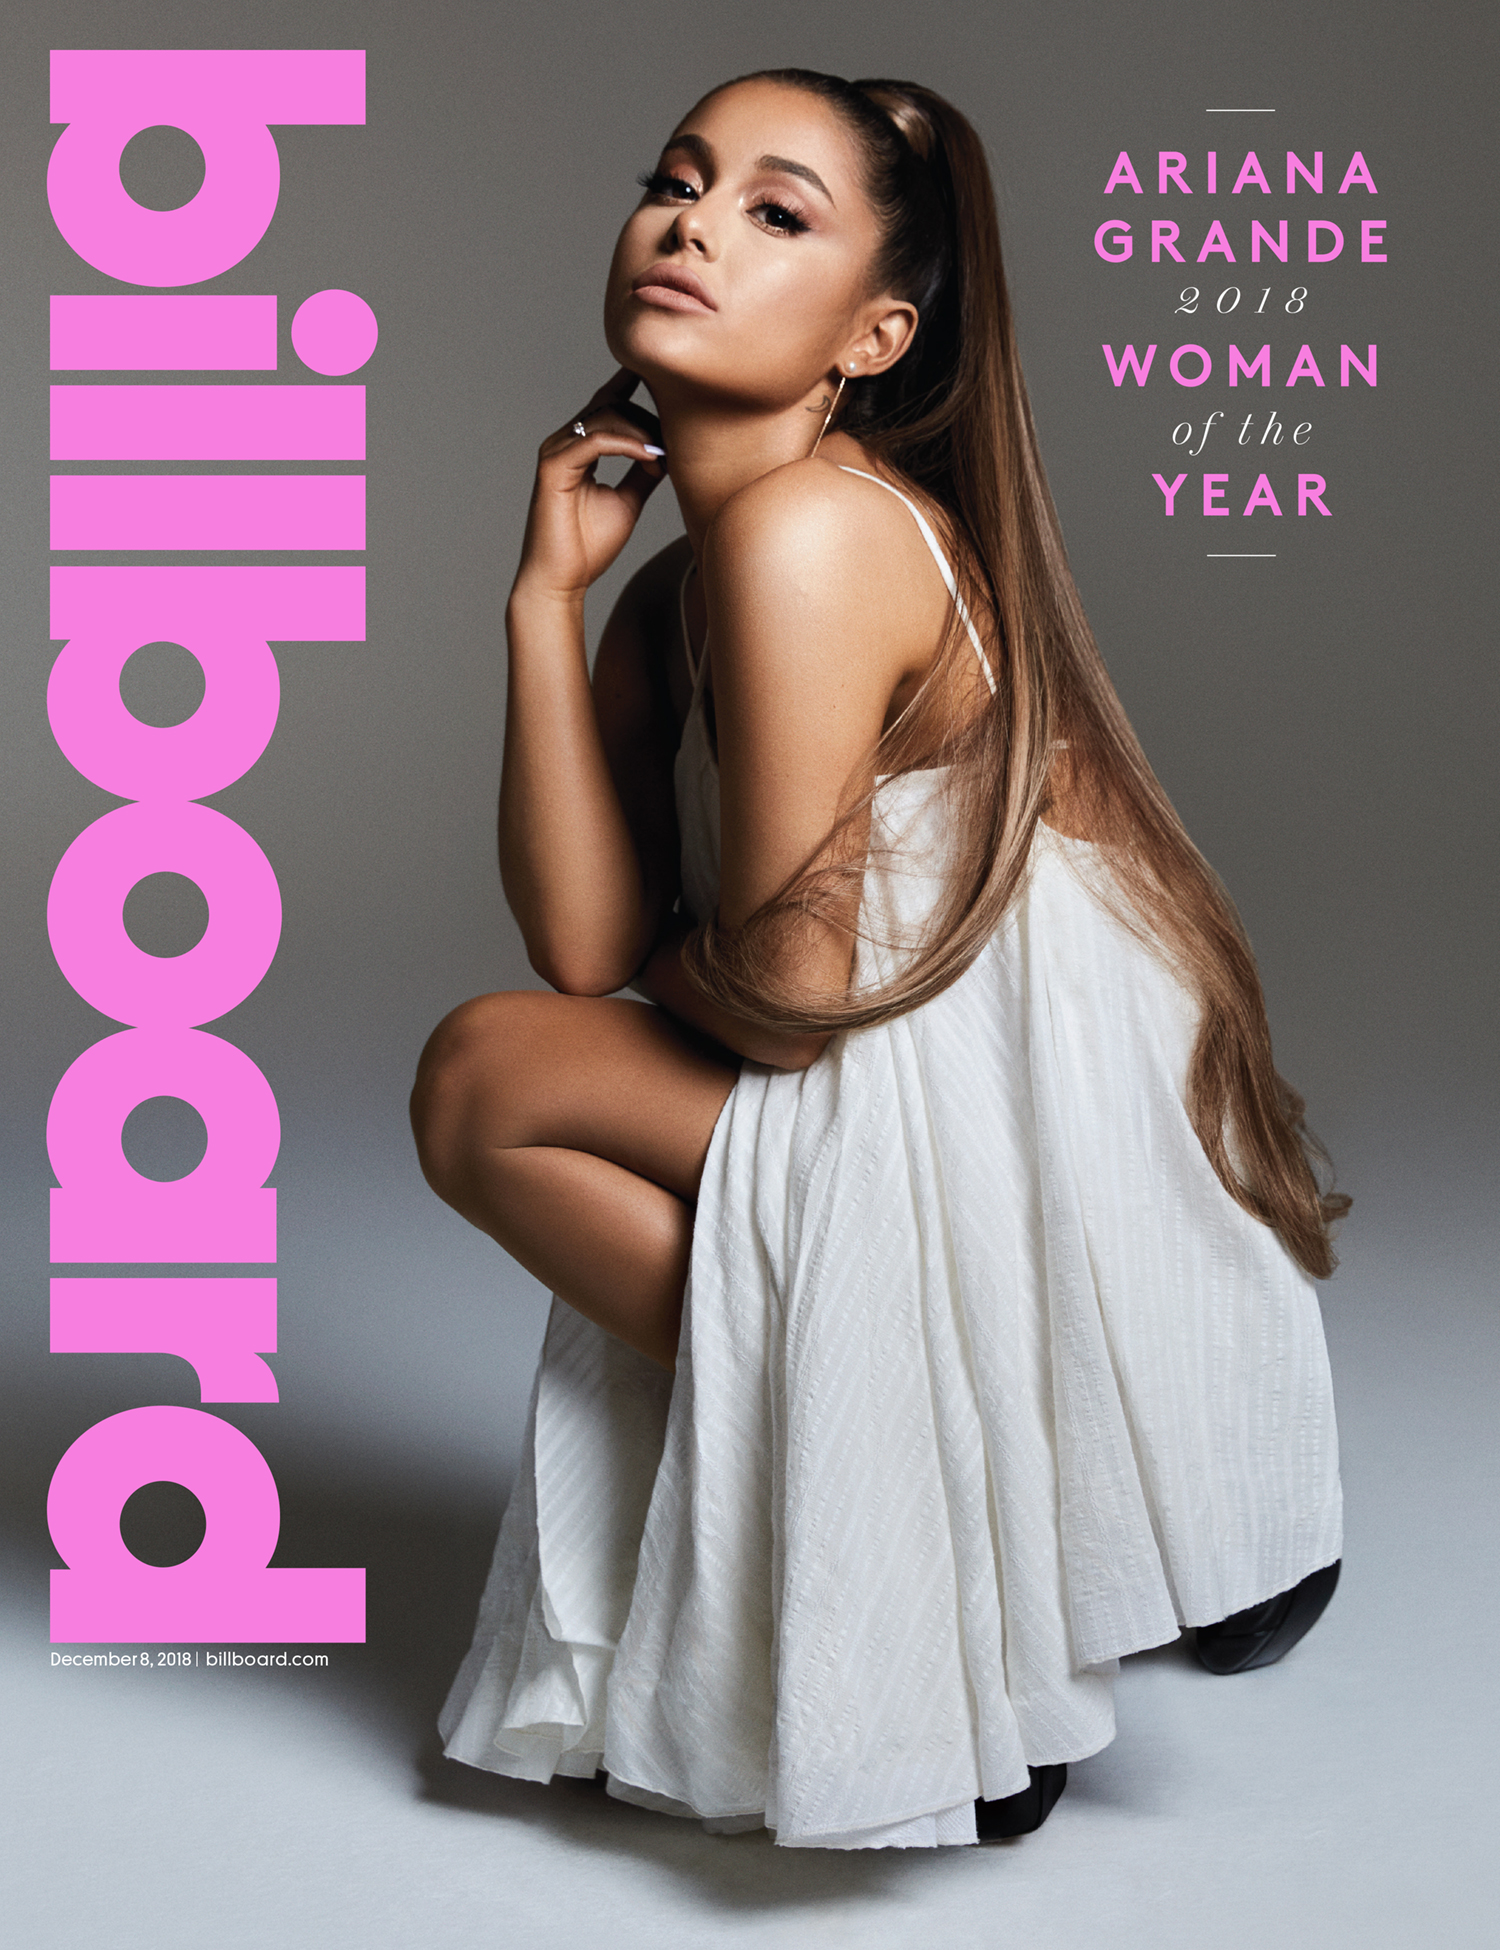 Ariana Grande for Billboard â€˜Woman of the Yearâ€™ 2018